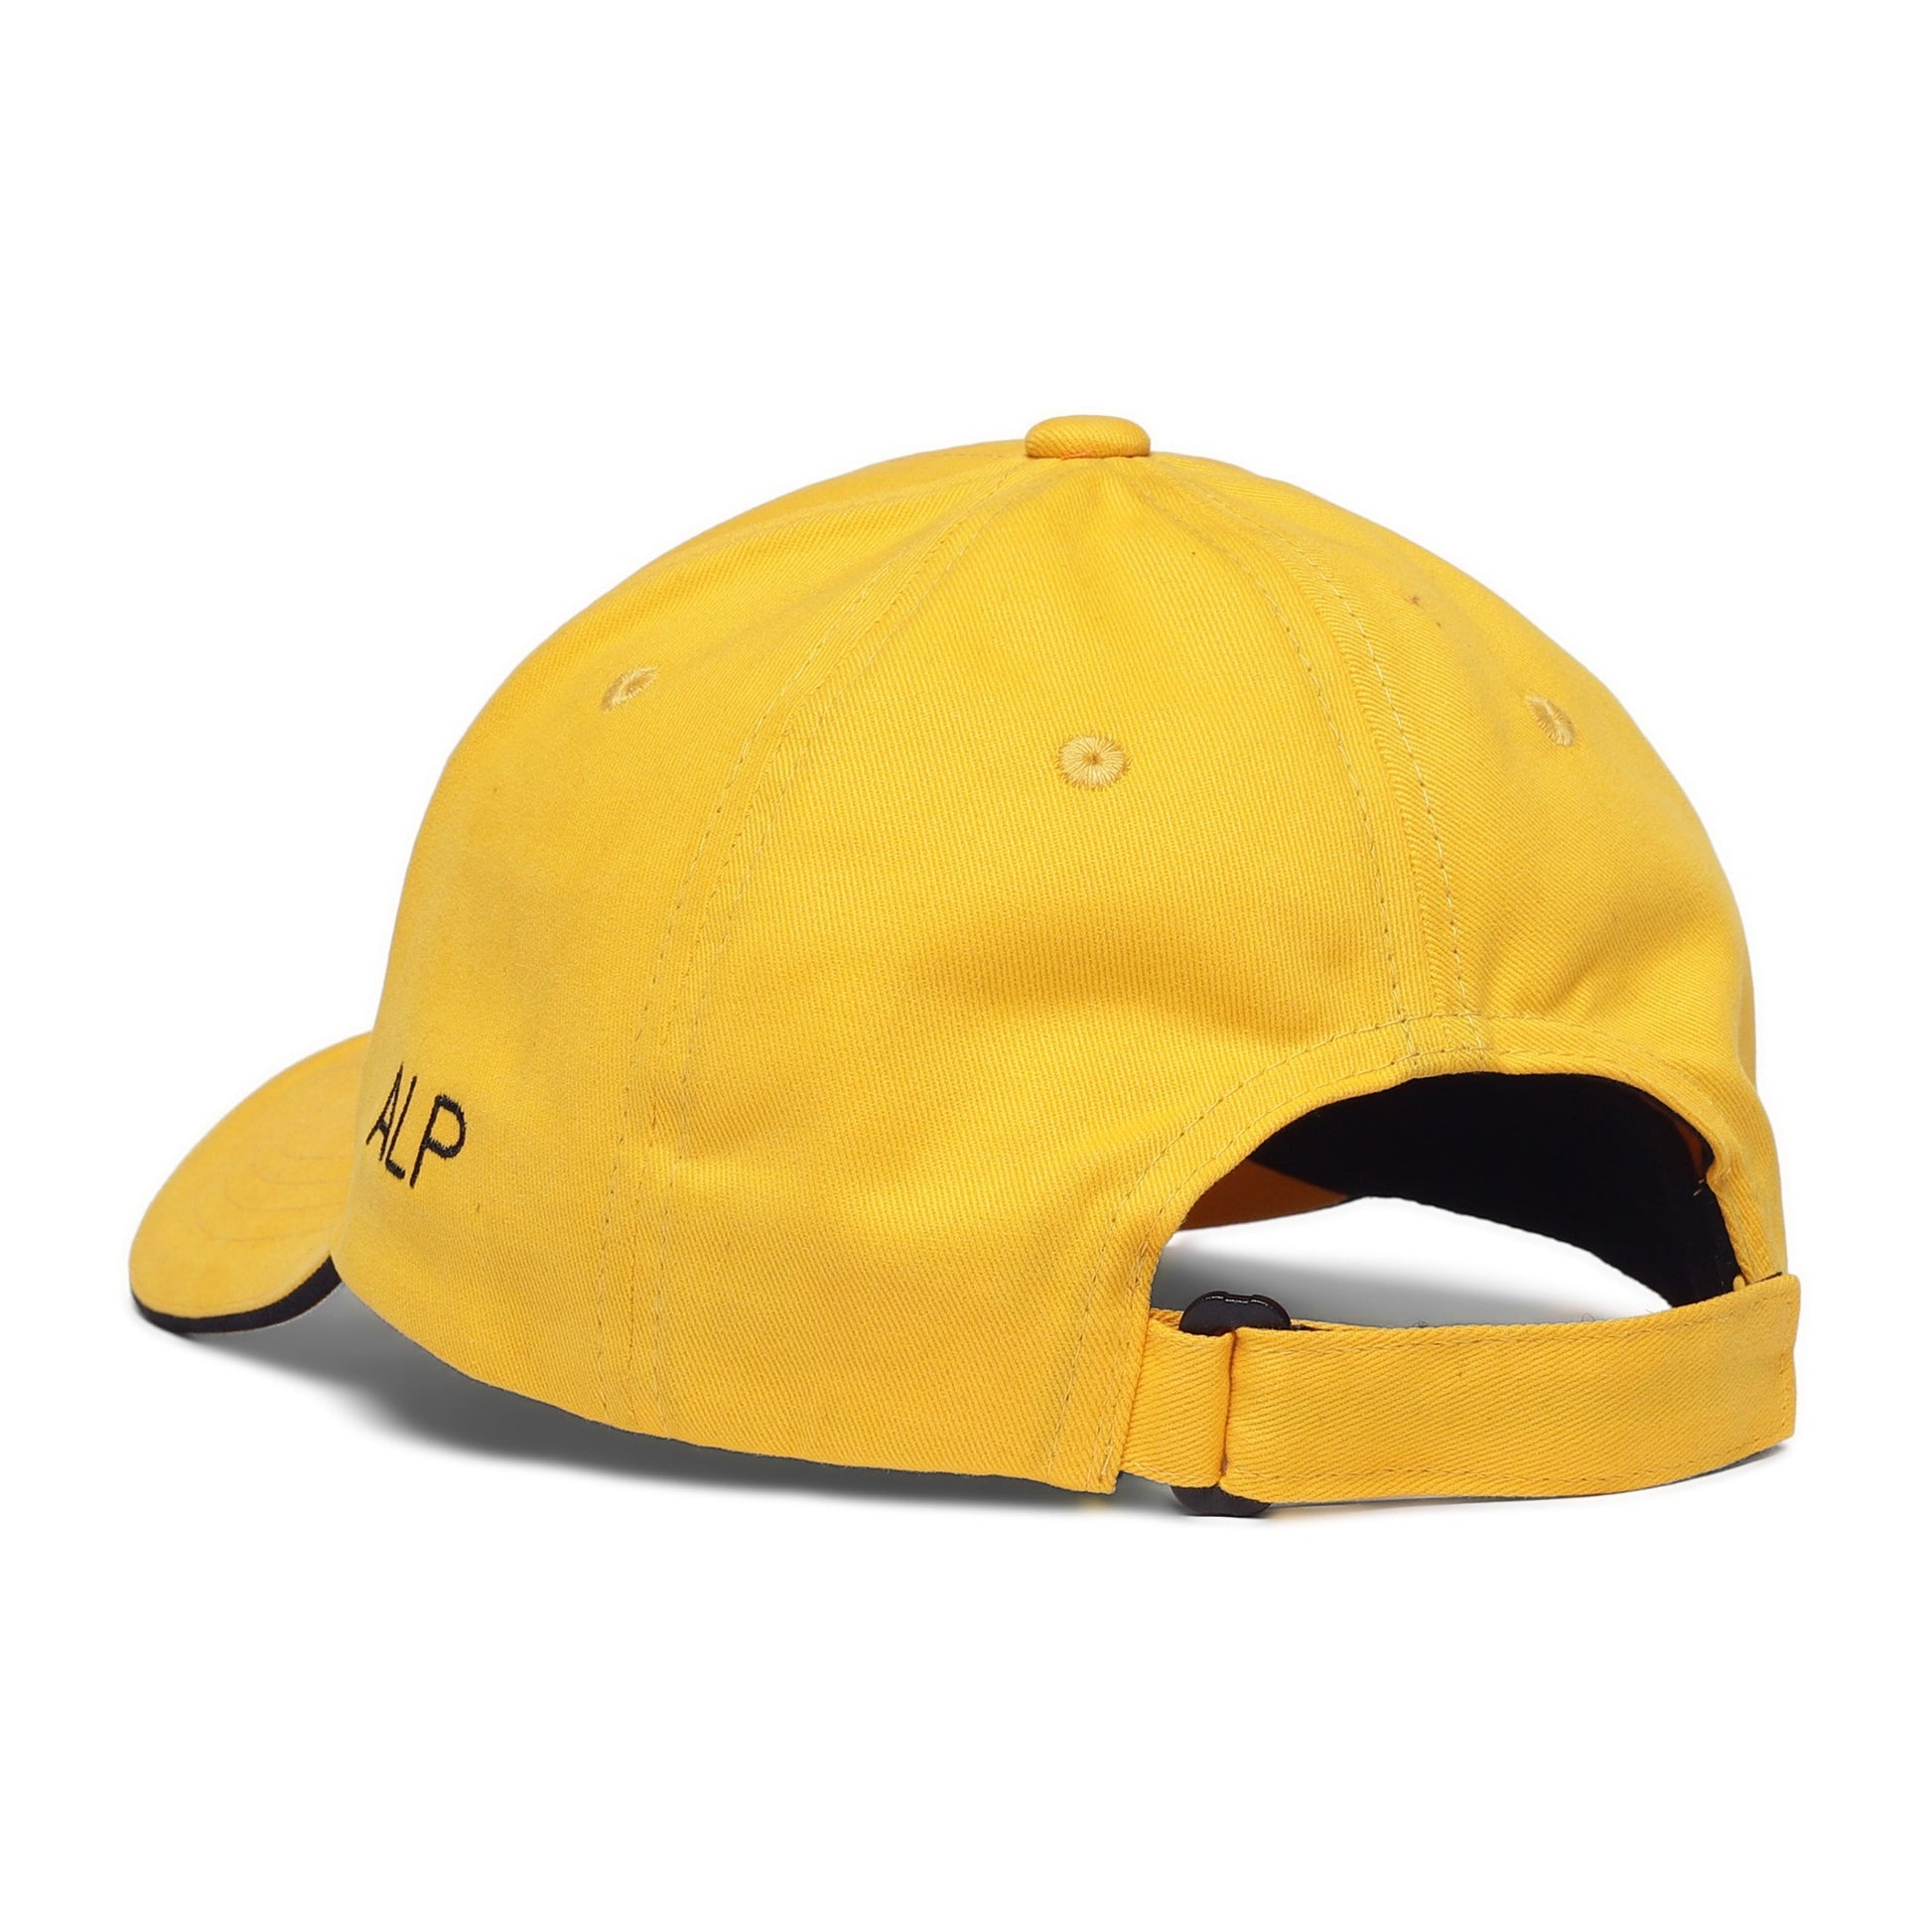 Buy Apex Premium Cotton Caps for Men Online - Yellow